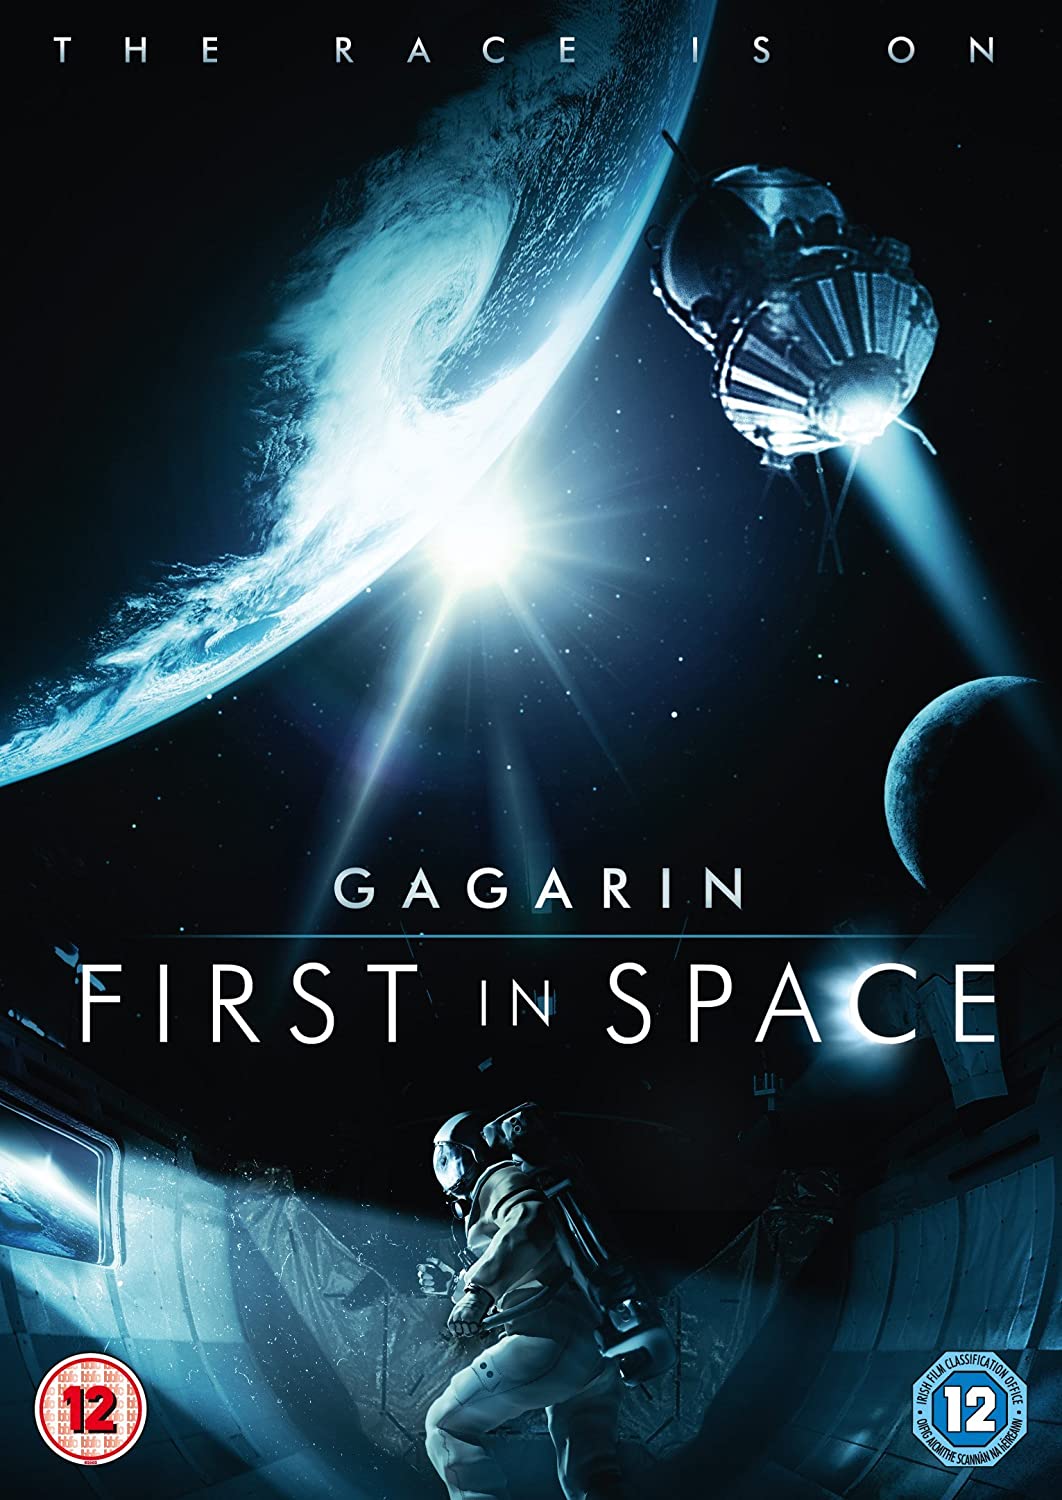 Gagarin: First In Space [2017] - Drama/Docudrama [DVD]